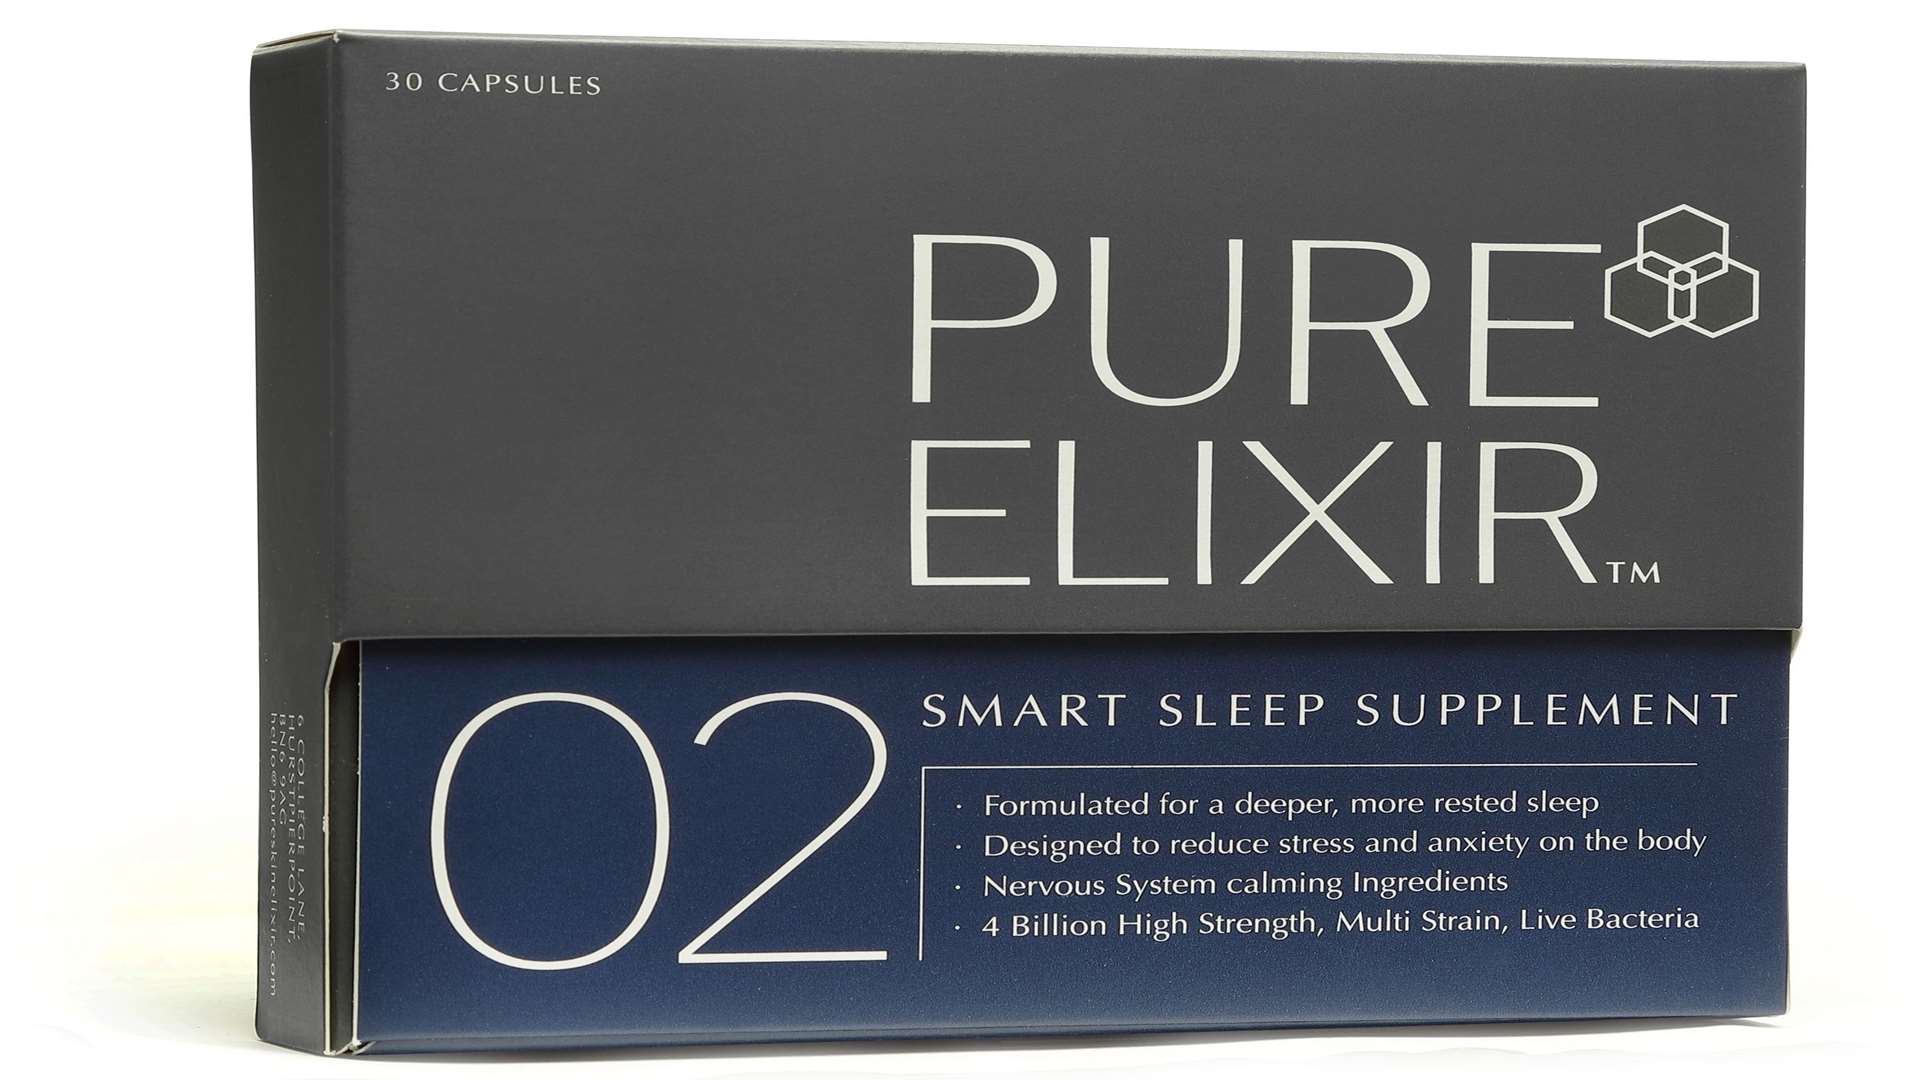 Pure Elixir 02 Smart Sleep Supplement, available from pureskinelixir.com